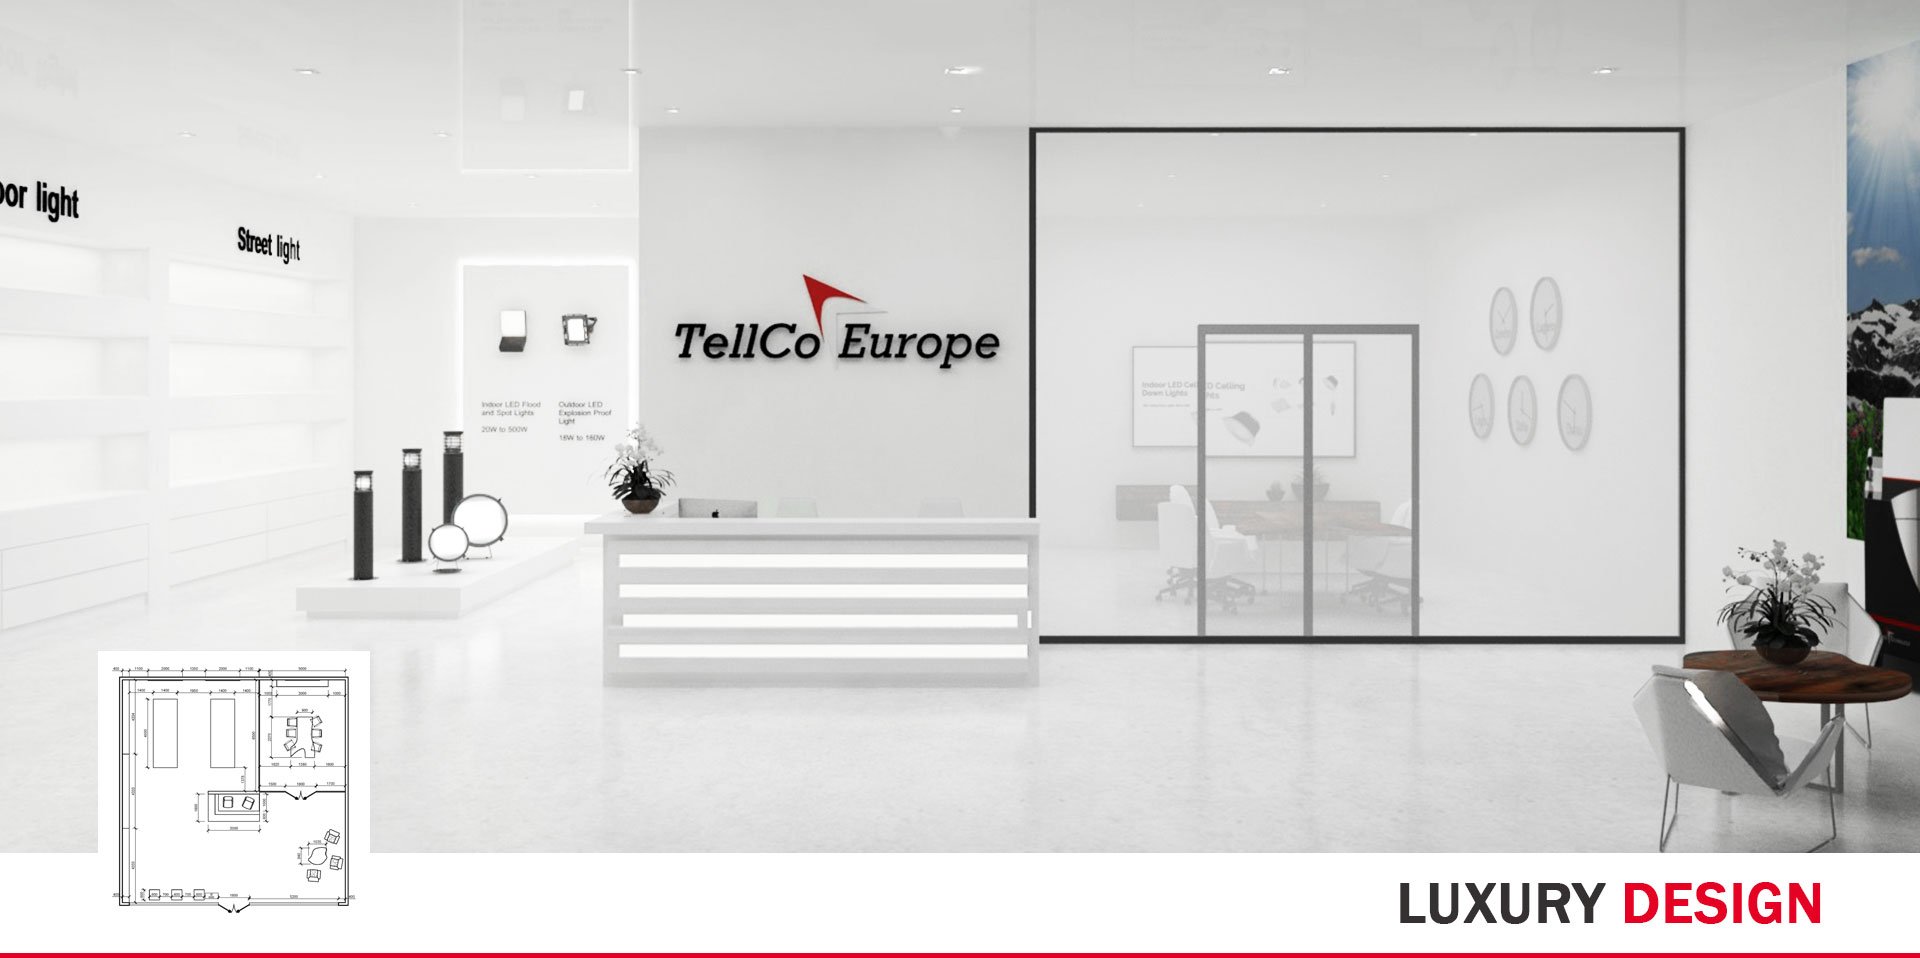 Tellco Europe luxury design